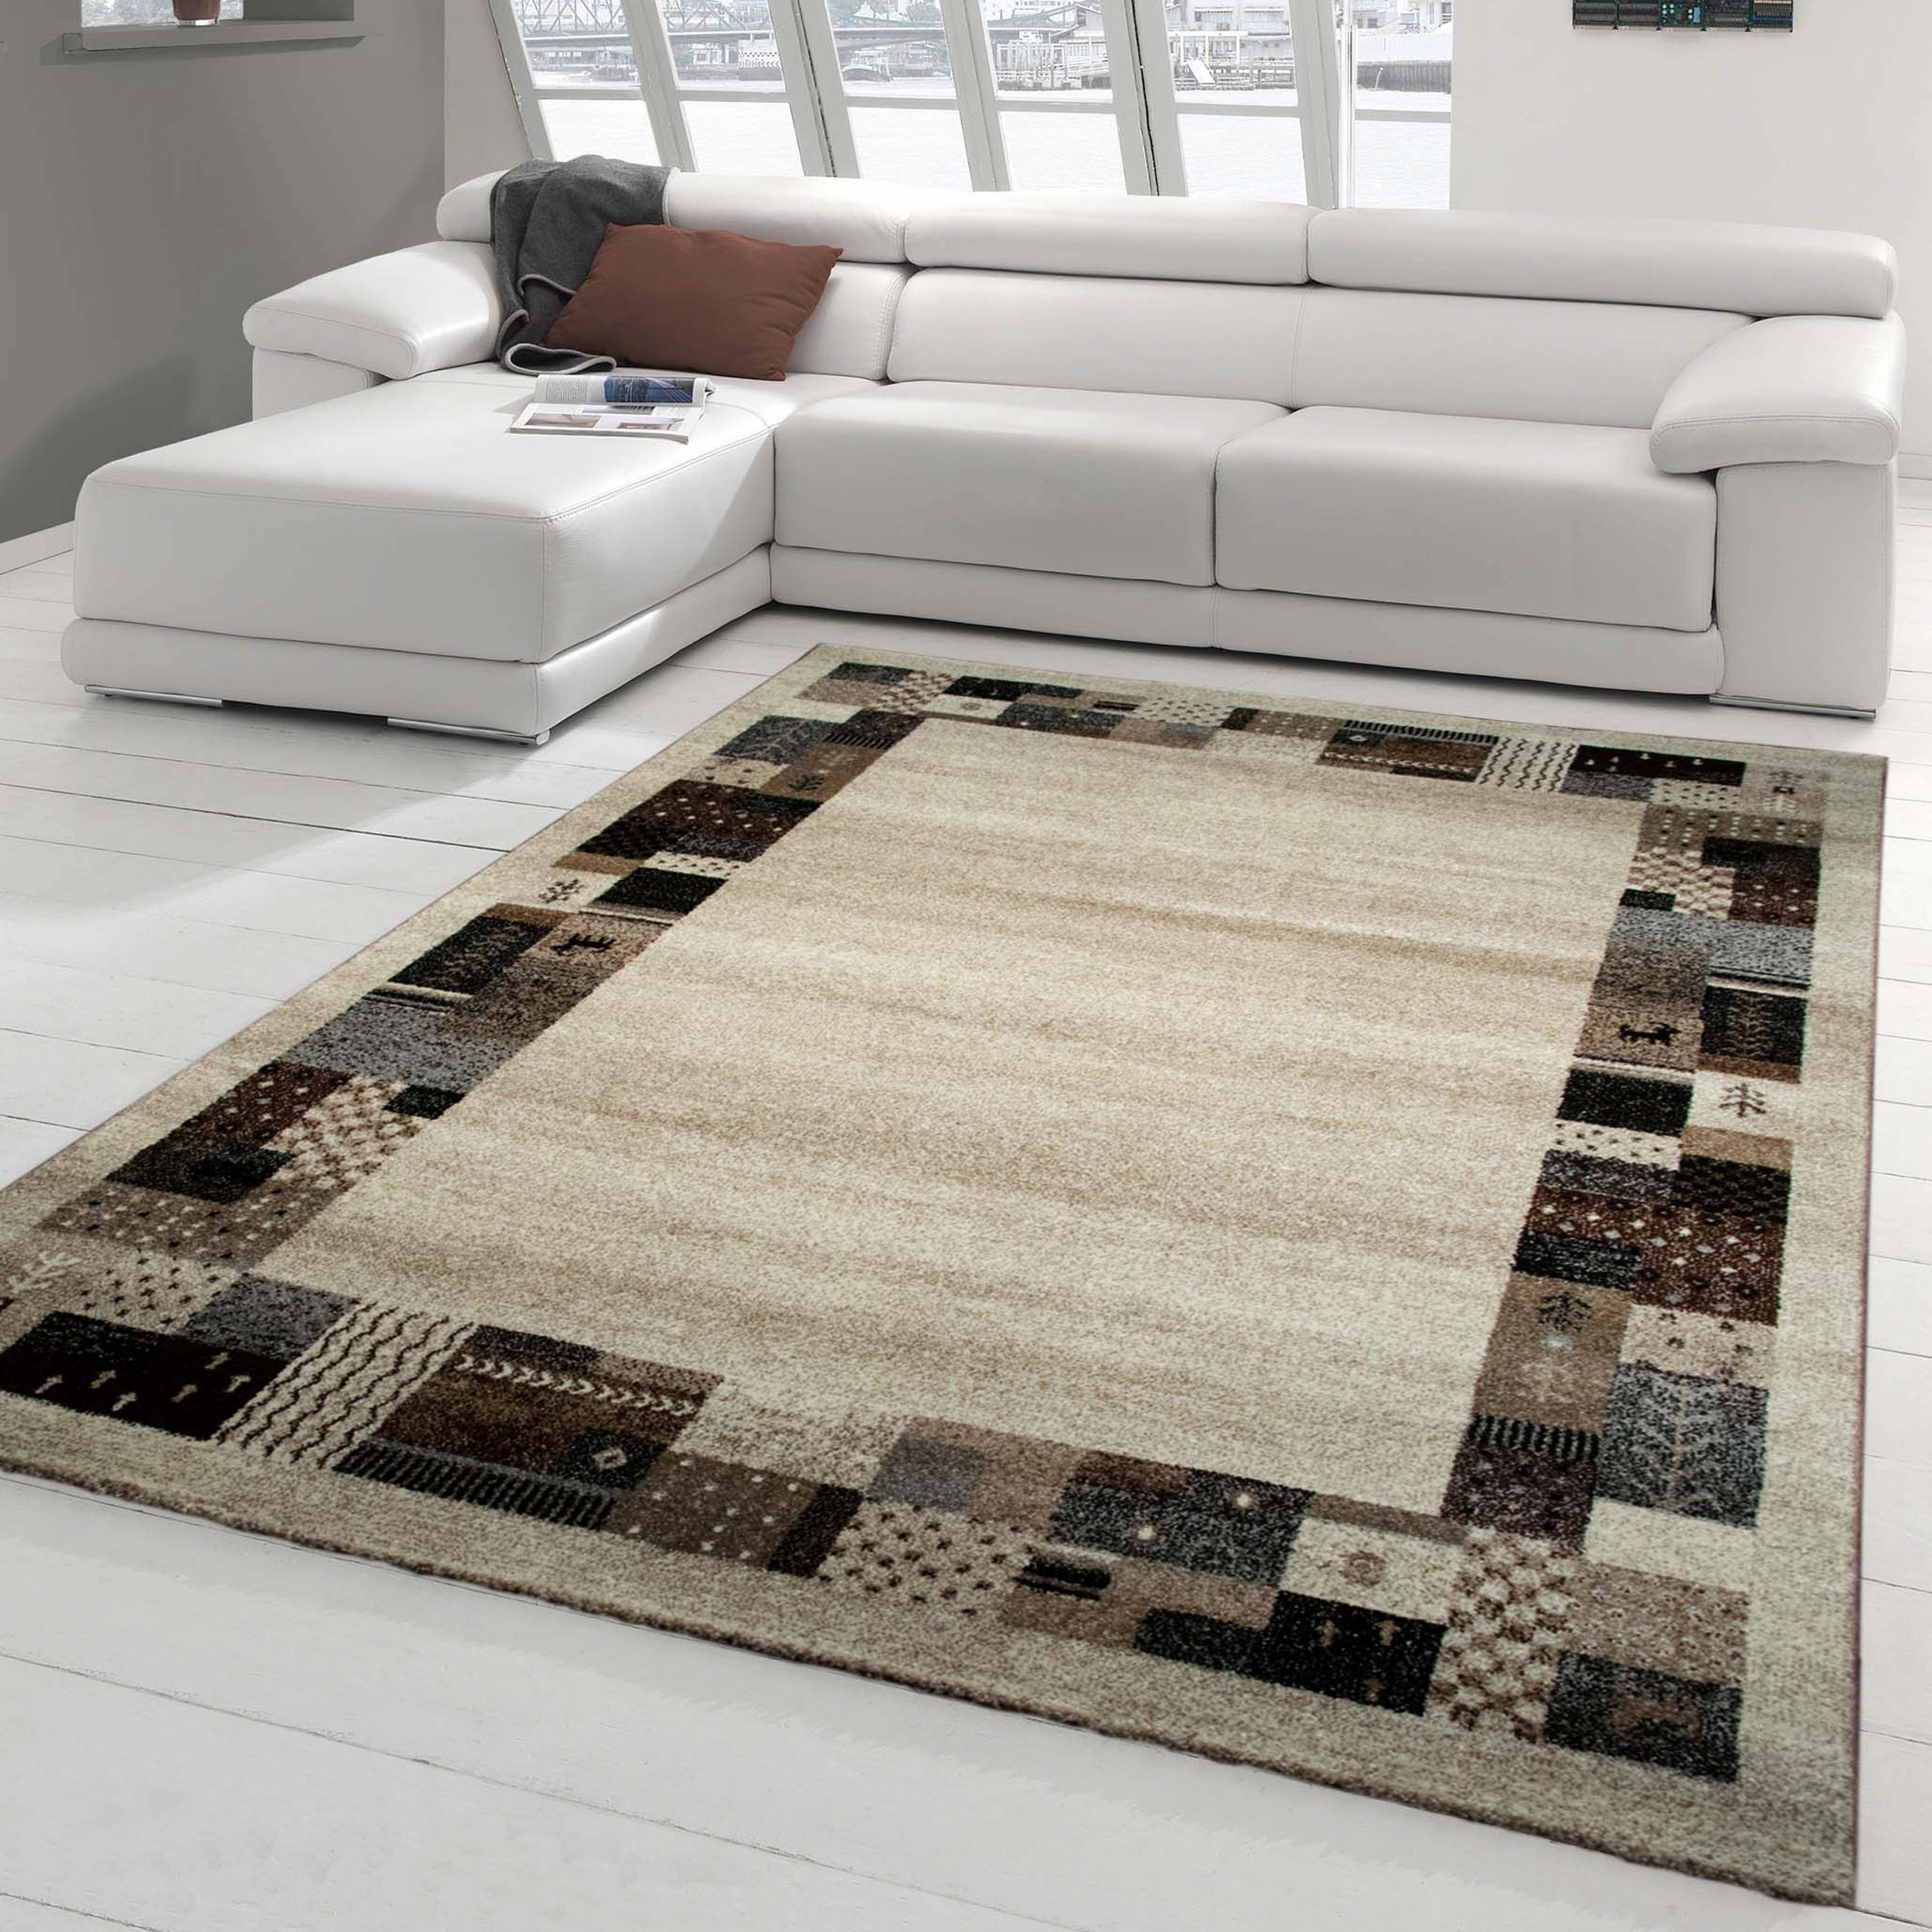 Modern & designer carpets: High-quality -Traum and dreams - Teppich carpet at cheap